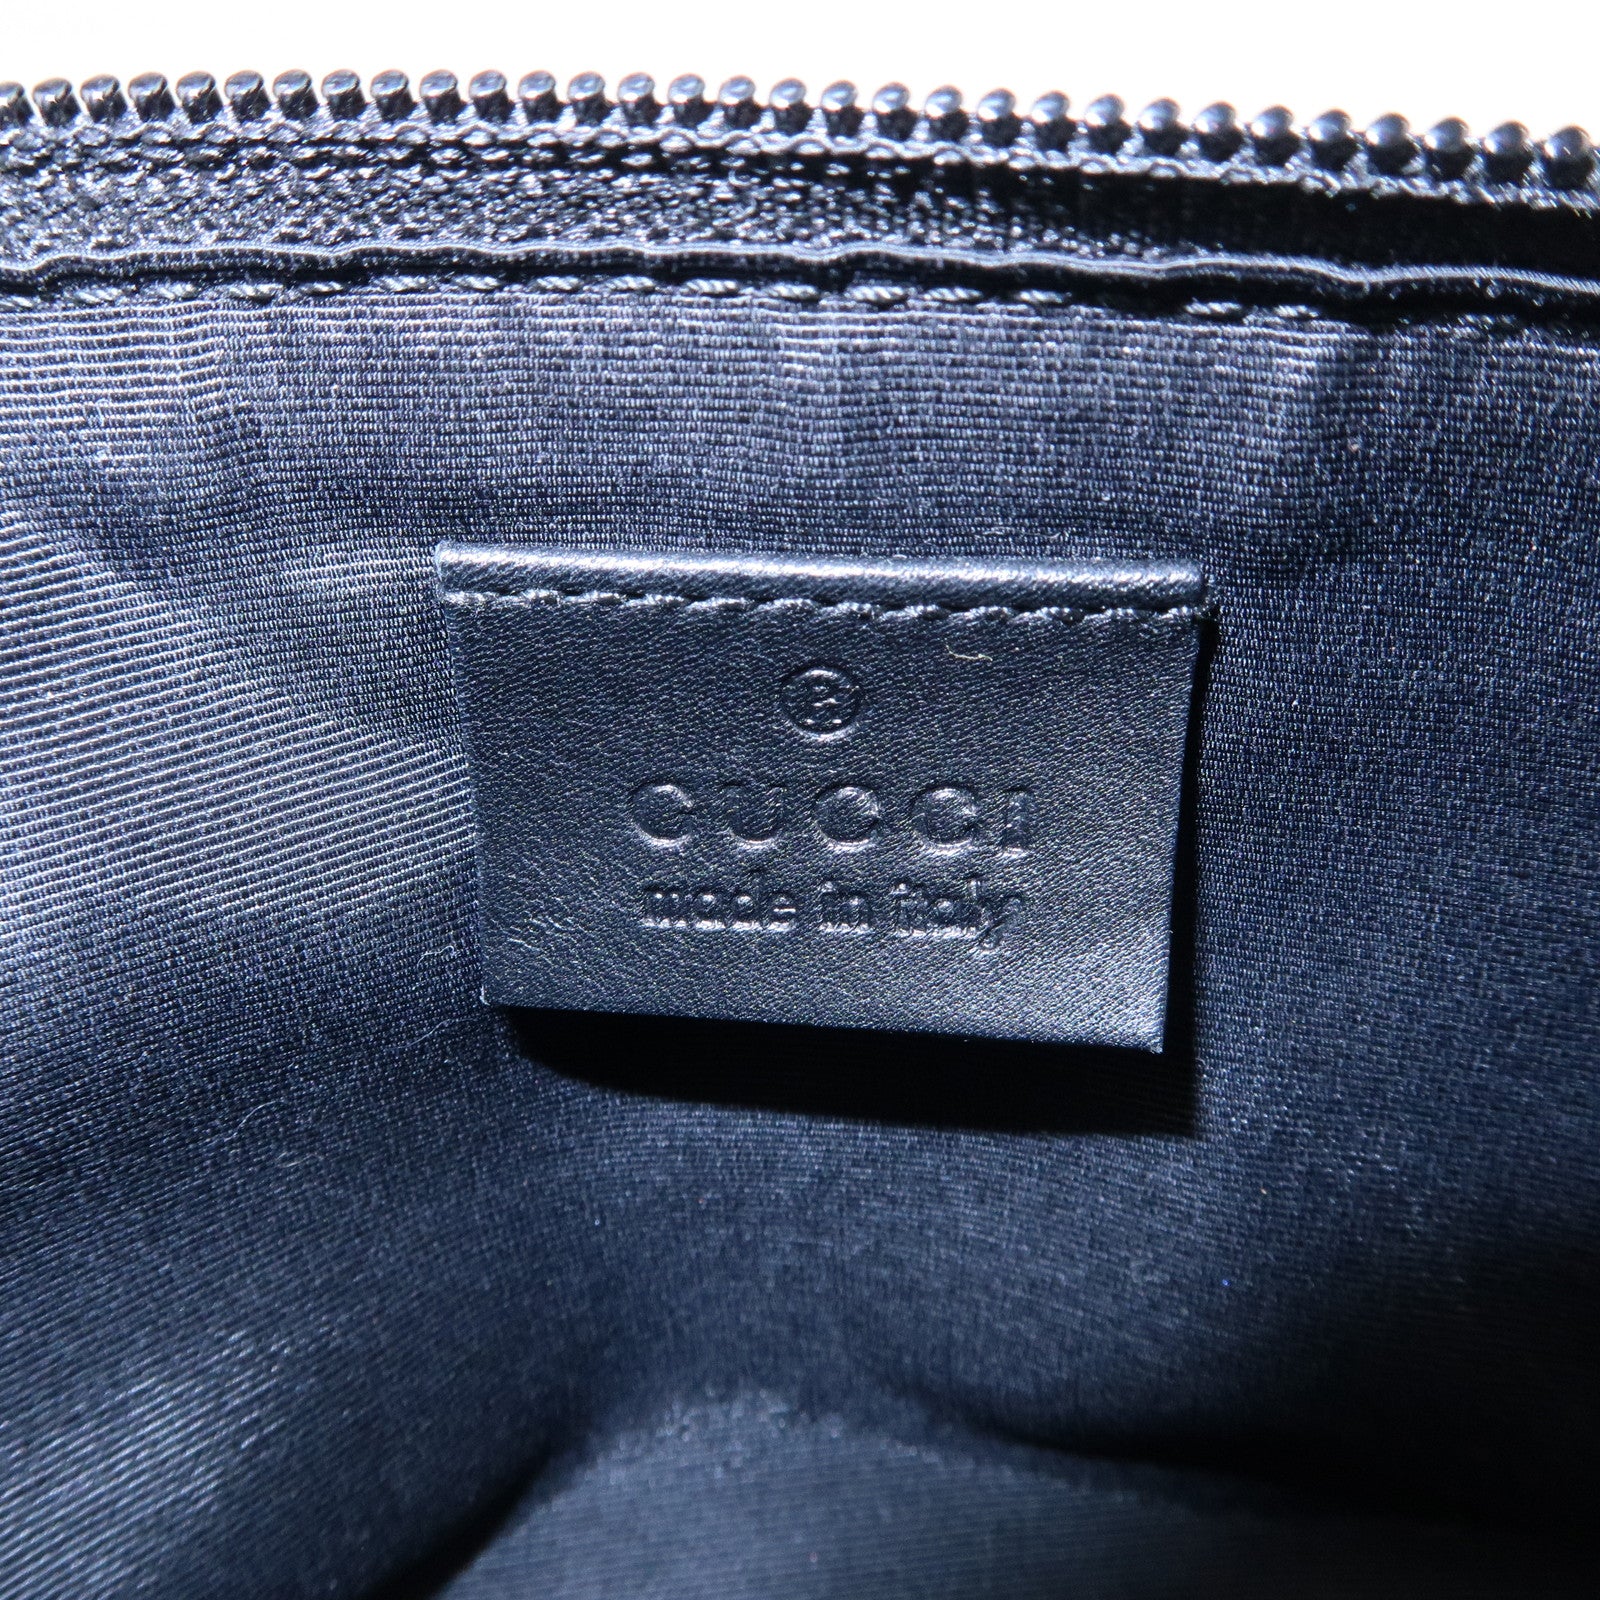 Where can I get branded first copy handbags like Gucci, MK Zara